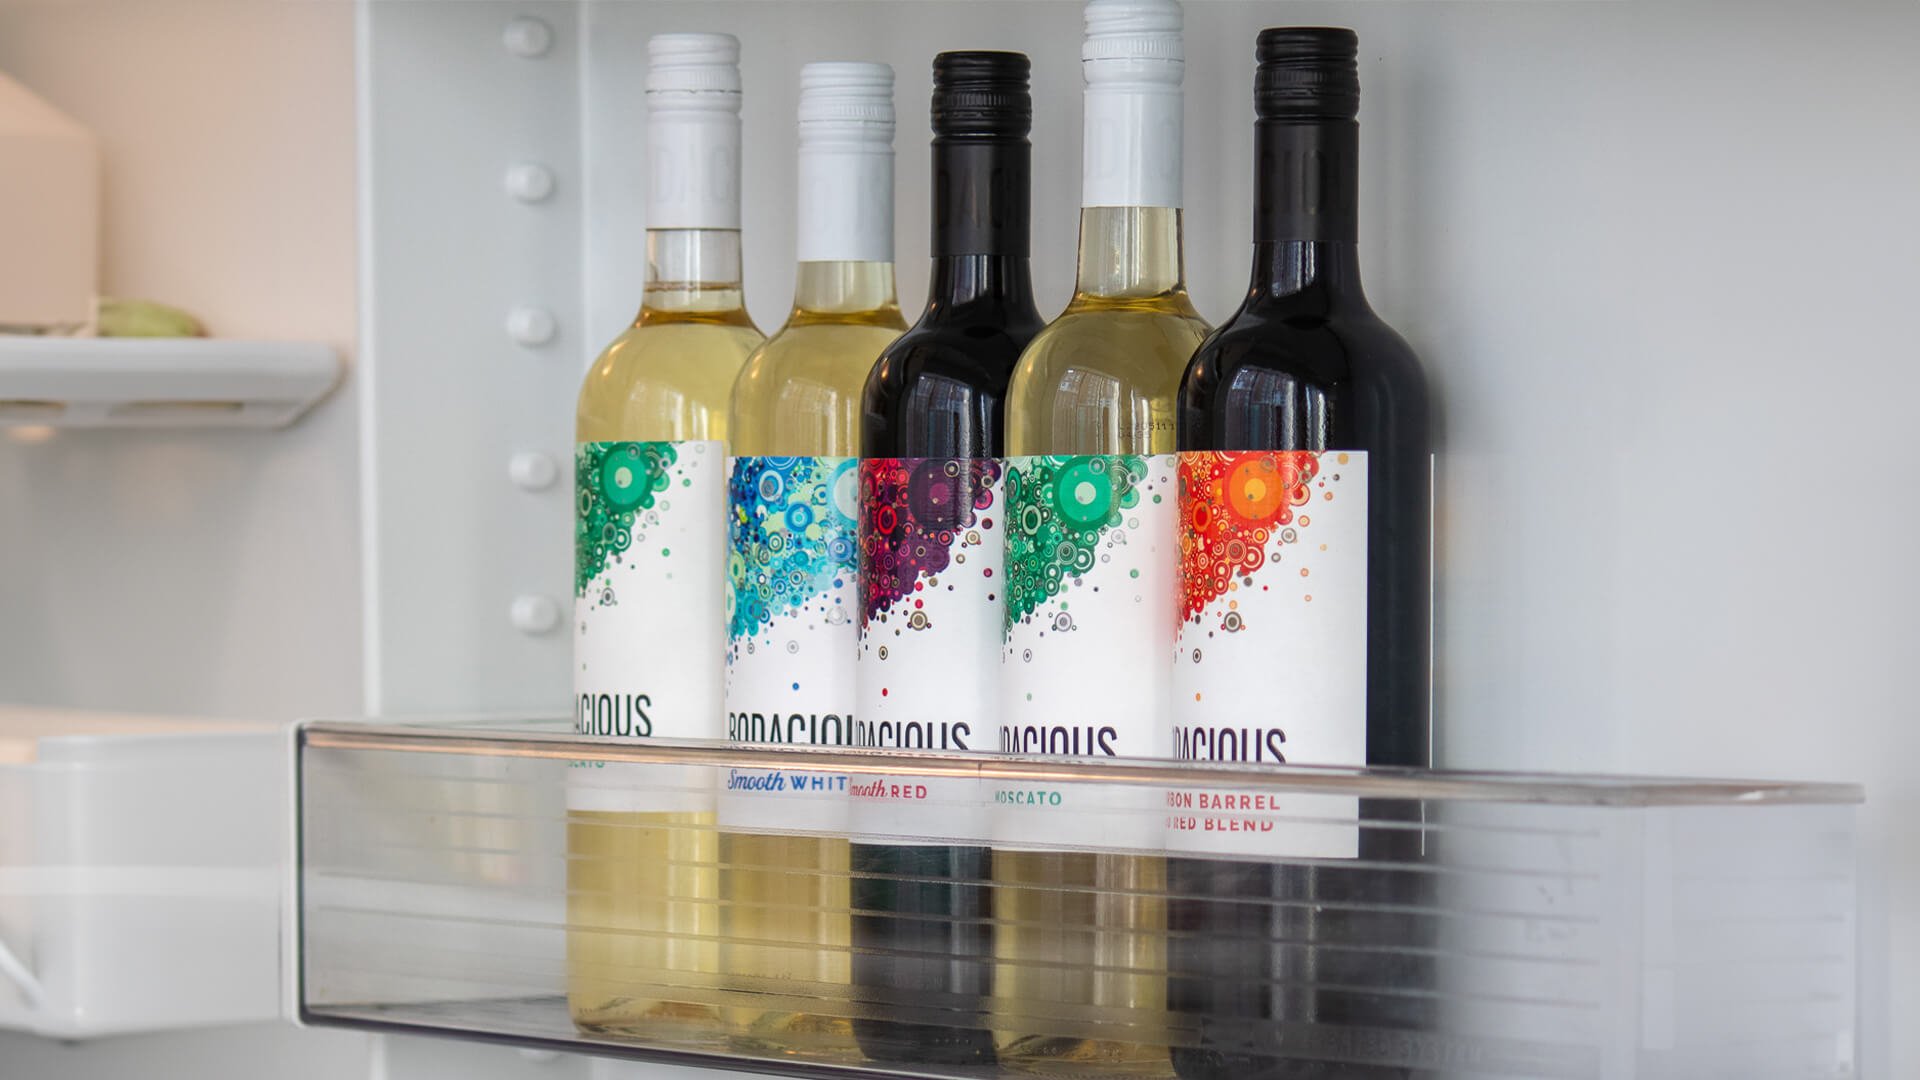 Bottles of Bodacious wine on a shelf.